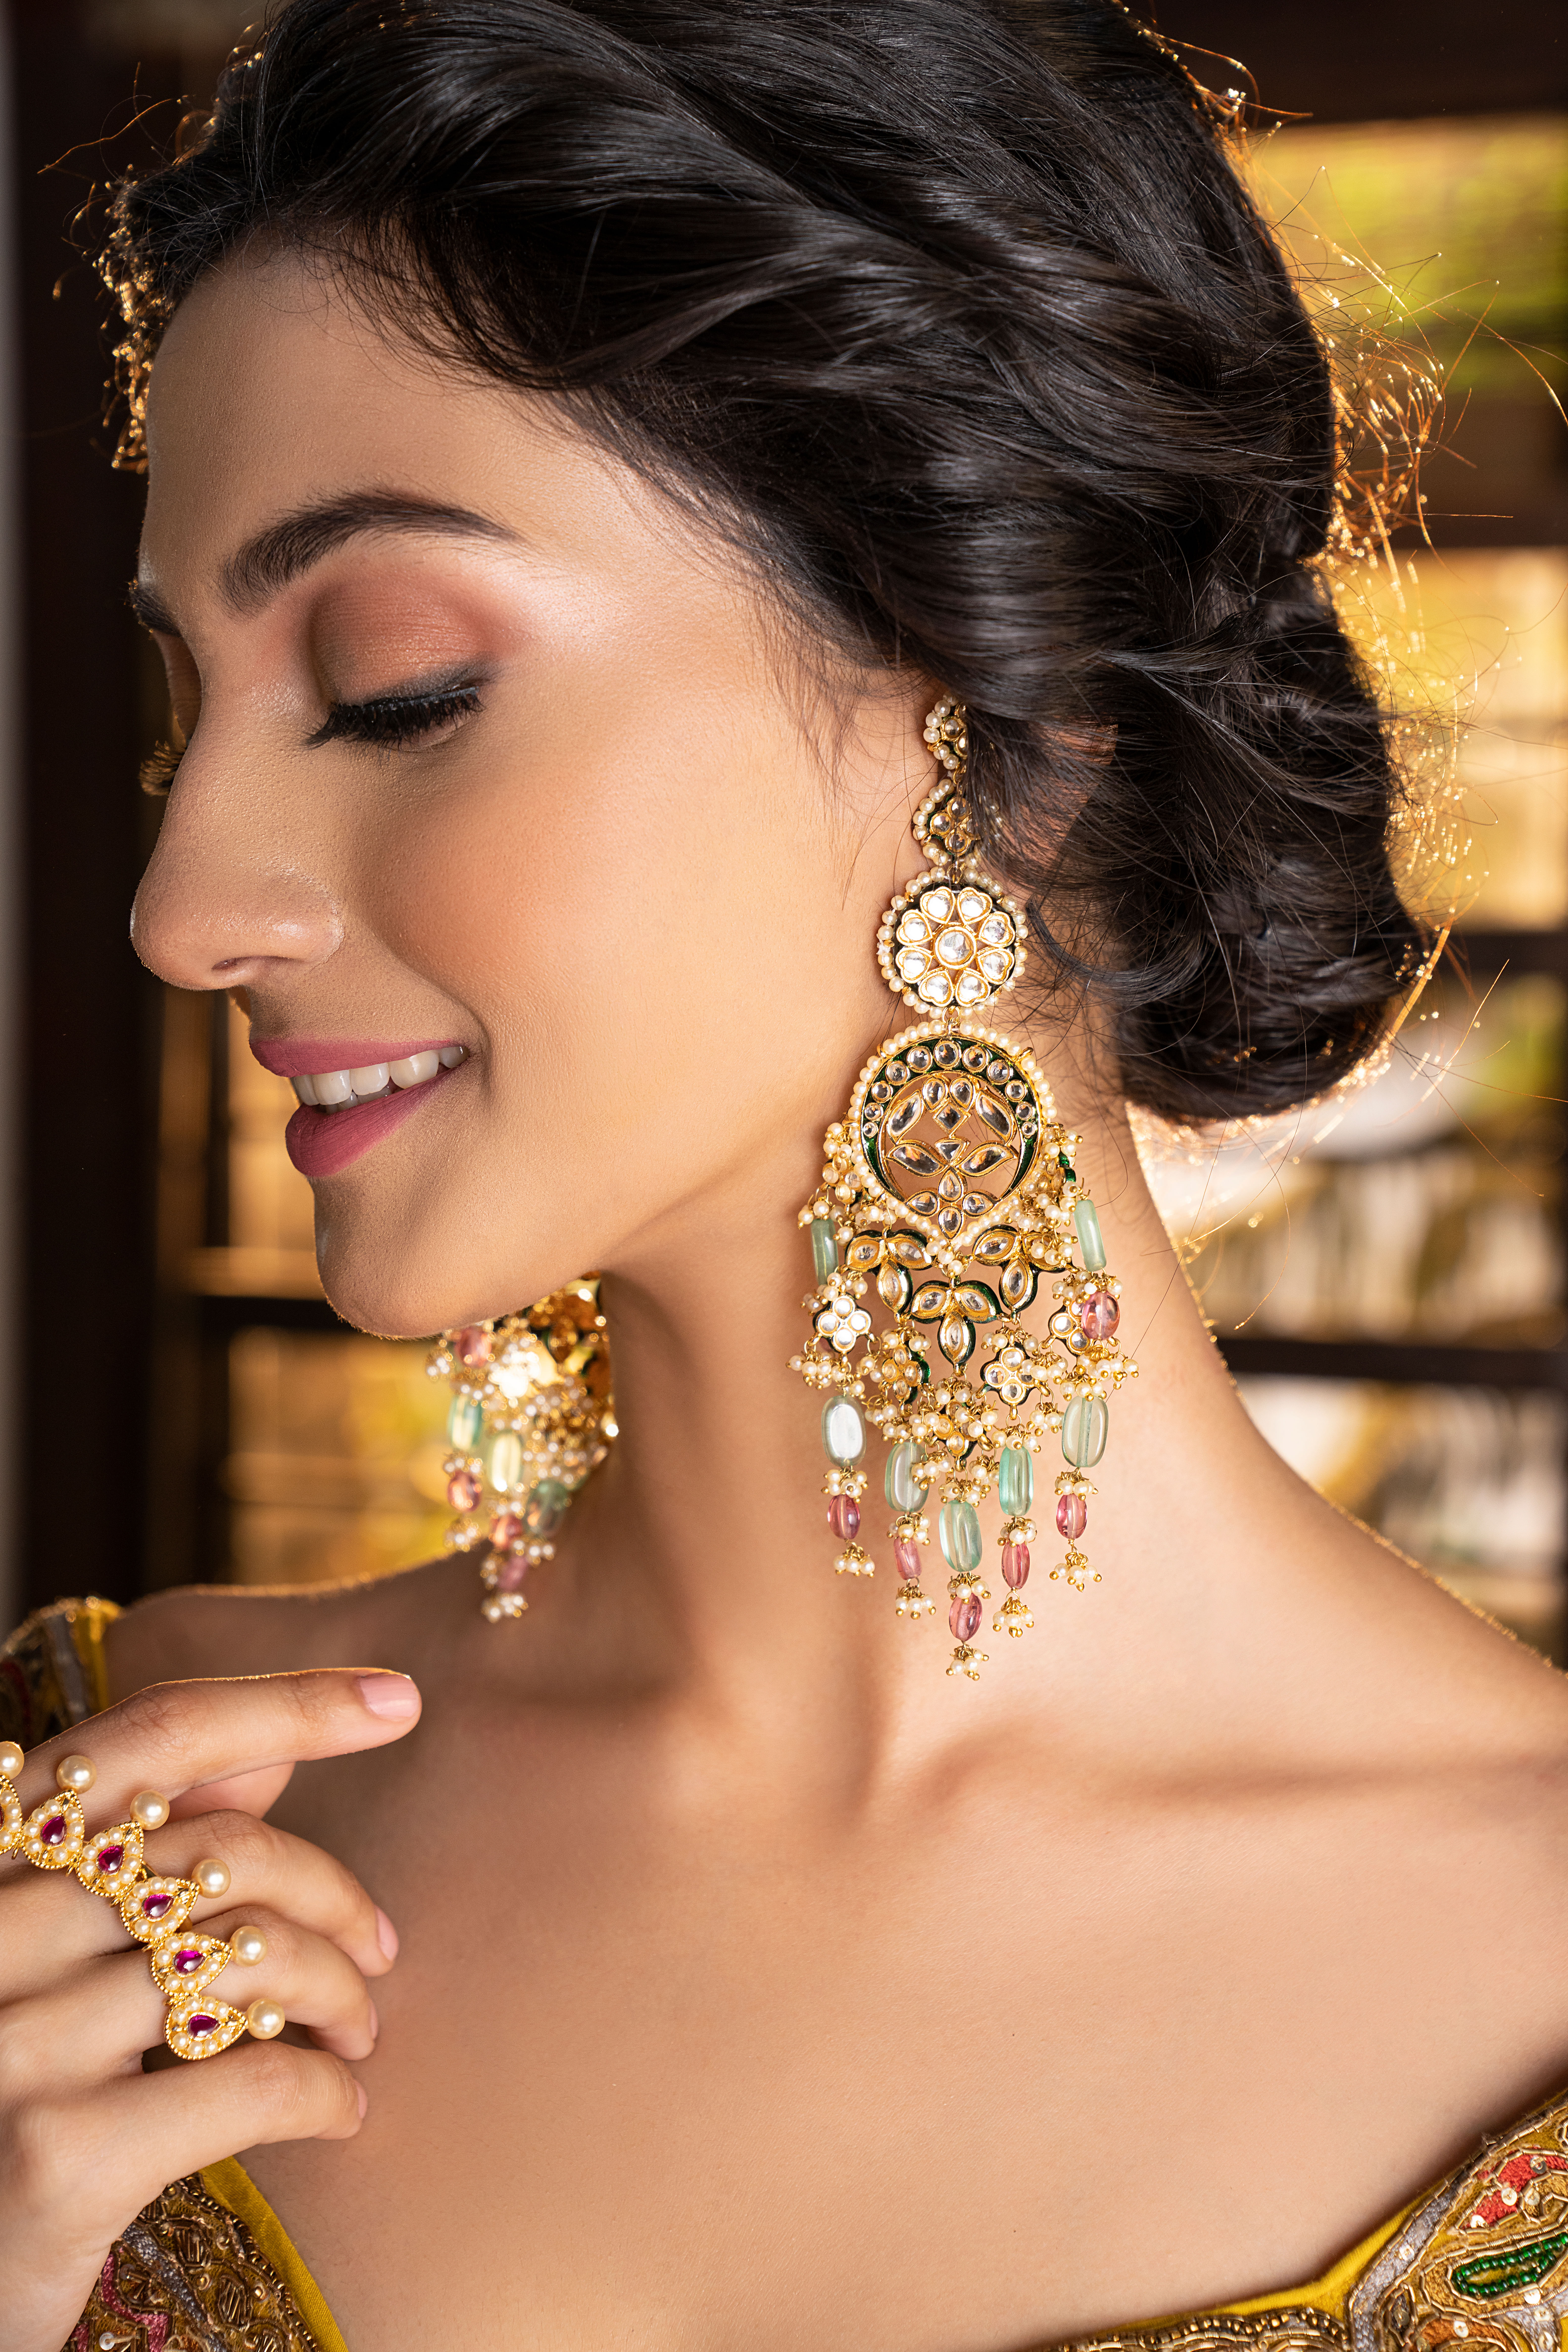 Buy Rose Gold Earrings Long Dangle Earrings Large Statement Online in India   Etsy